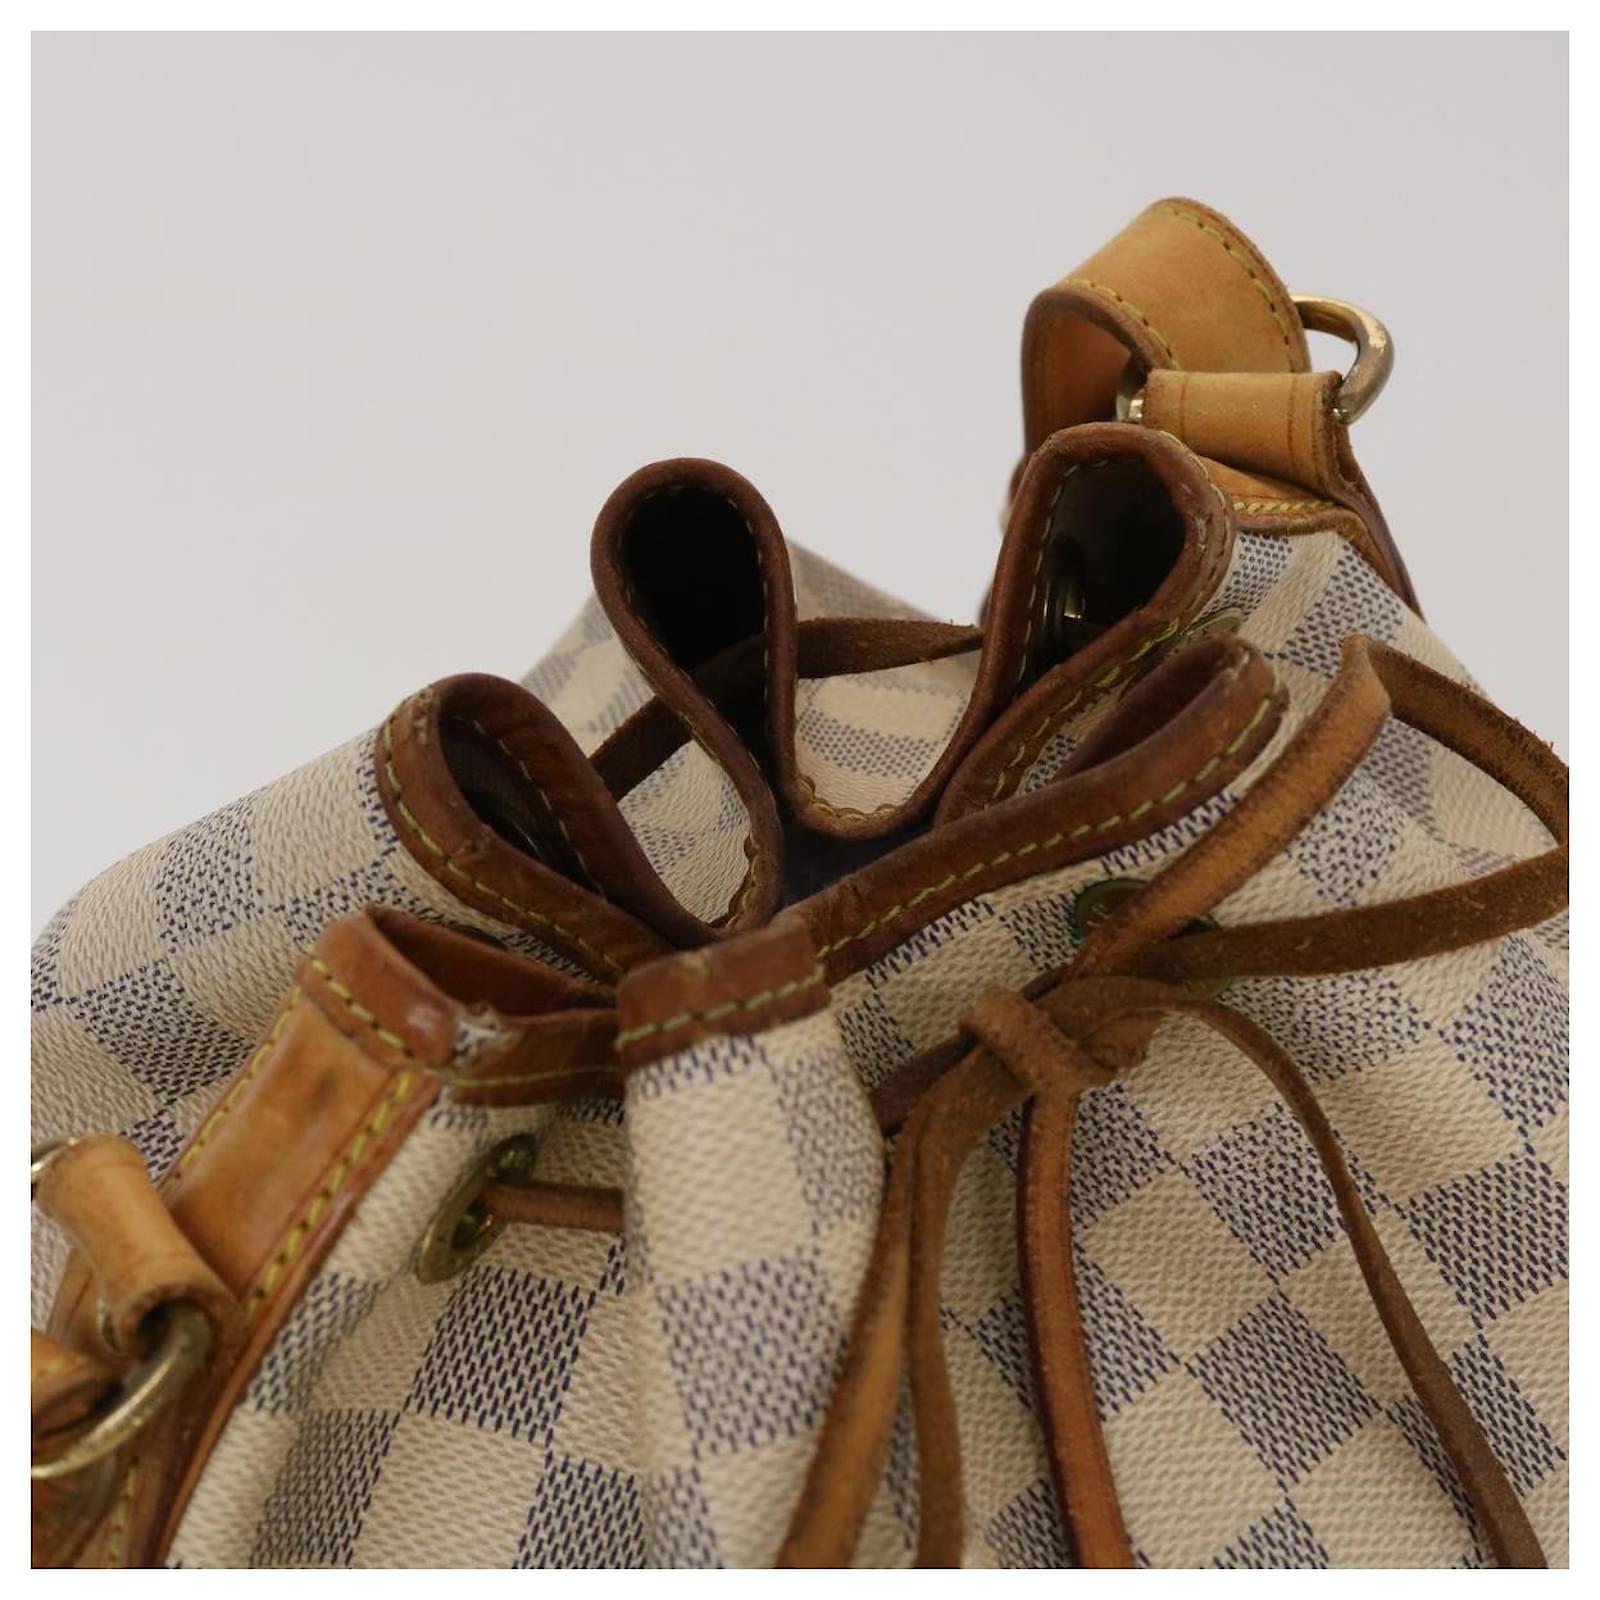 Noé BB Damier Azur Canvas - Handbags N41220